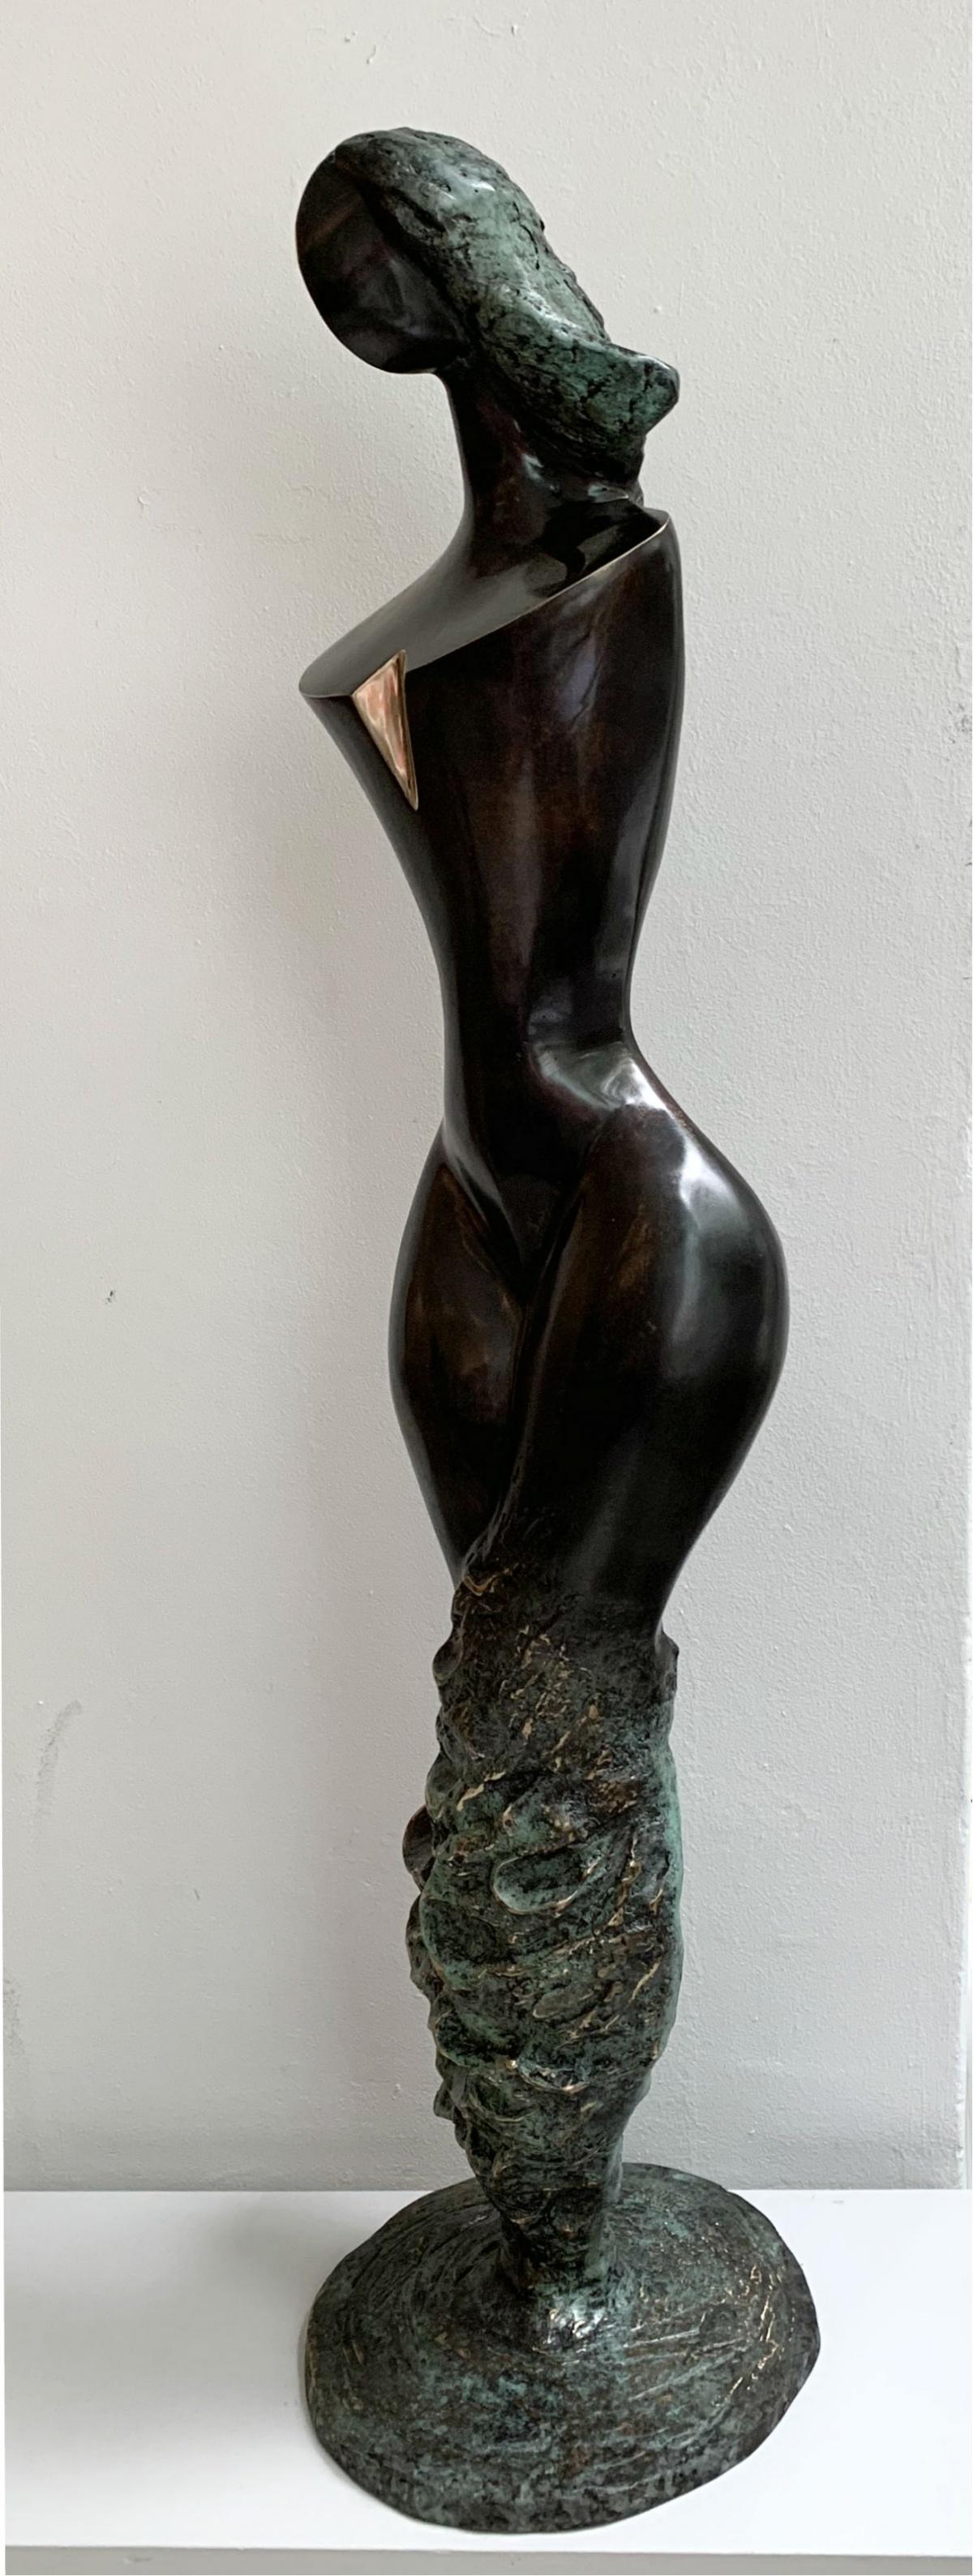 Wave venus - XXI century Contemporary bronze sculpture, Abstract & figurative - Gold Figurative Sculpture by Stanisław Wysocki